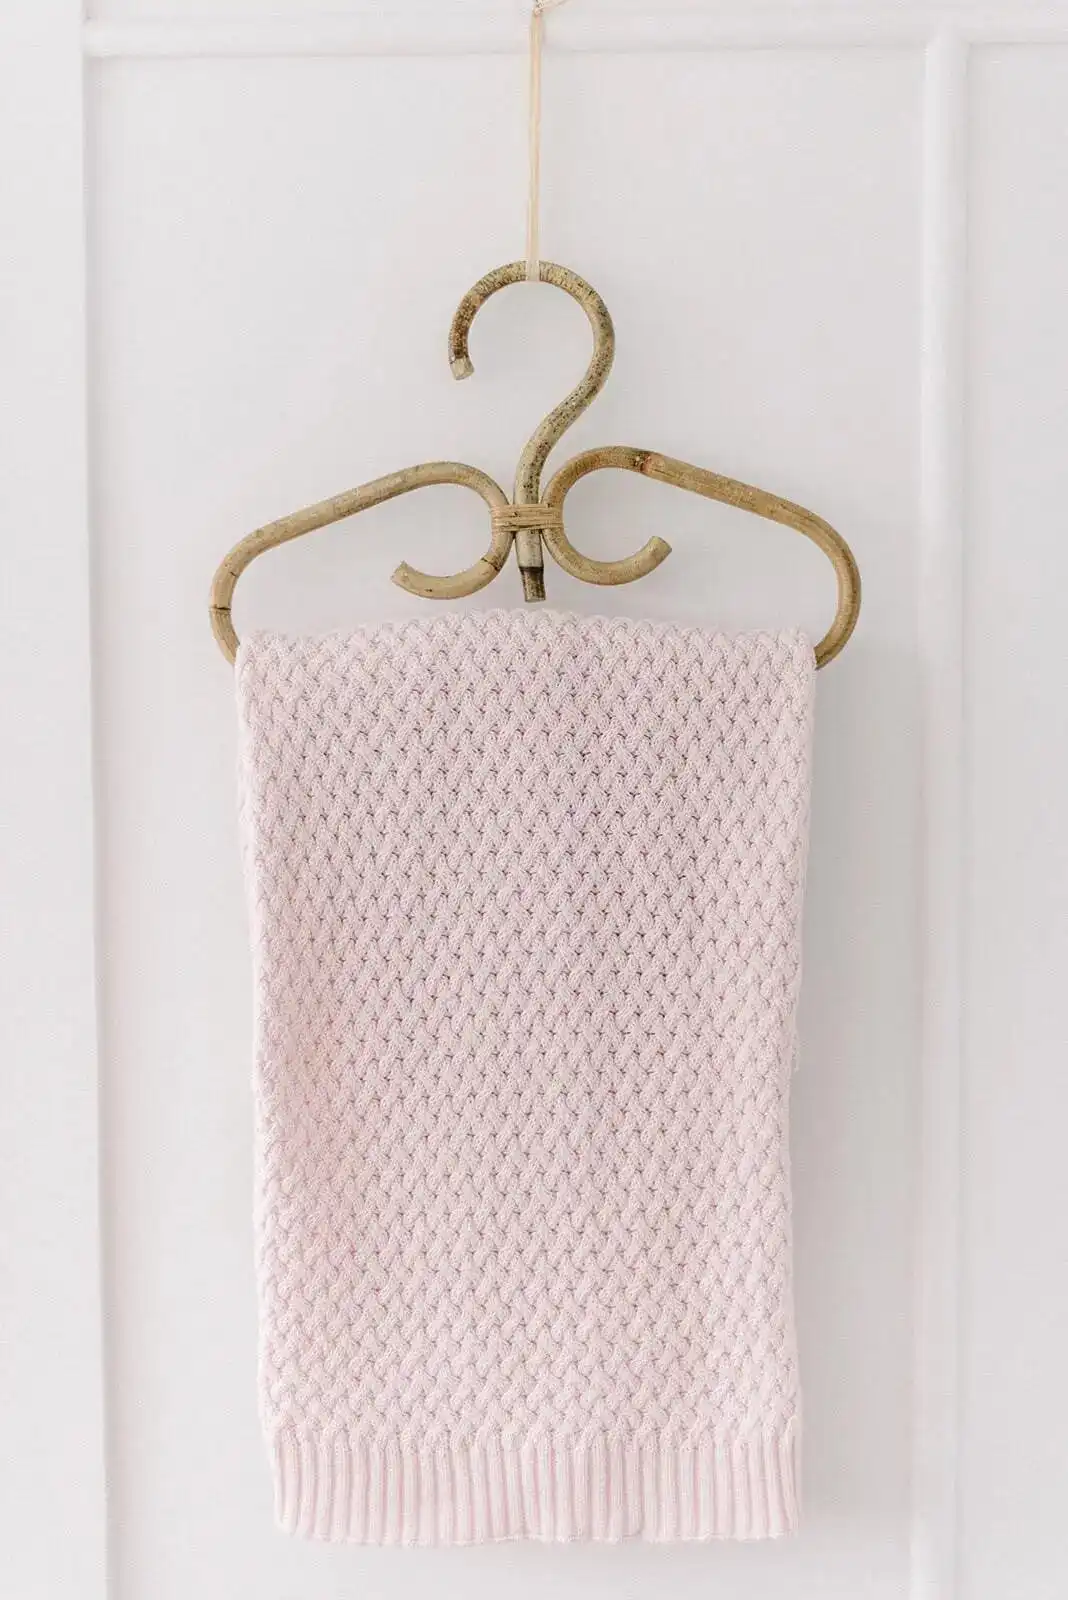 Blush Pink Diamond Knit Baby Blanket